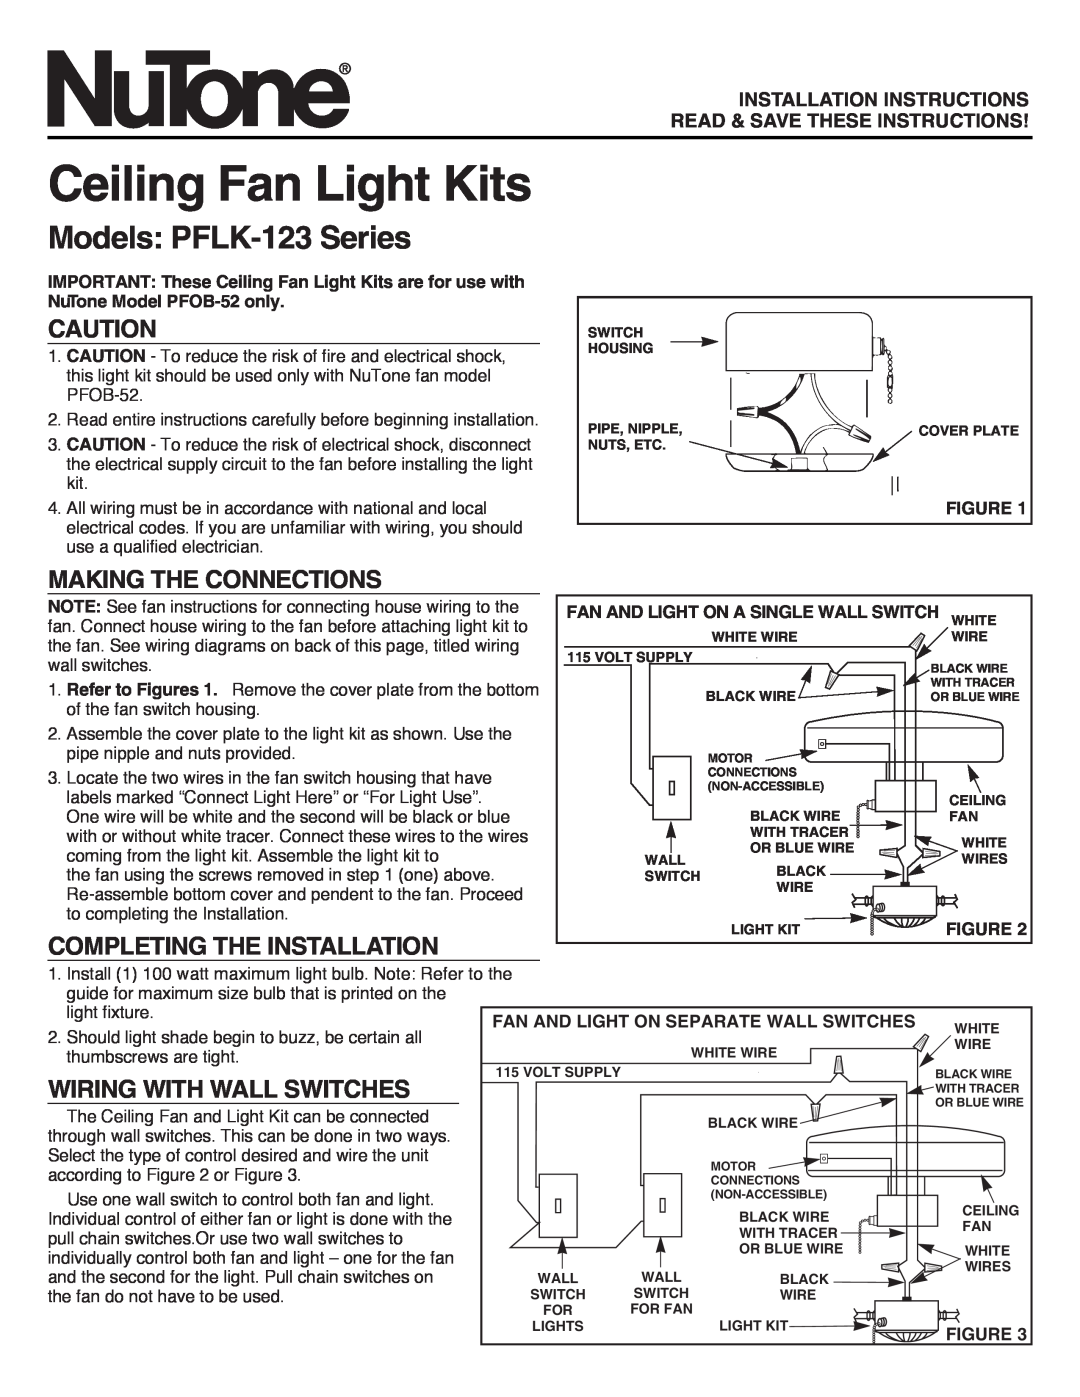 NuTone PFLK-123 installation instructions Fan And Light On A Single Wall Switch White, Ceiling Fan Light Kits 